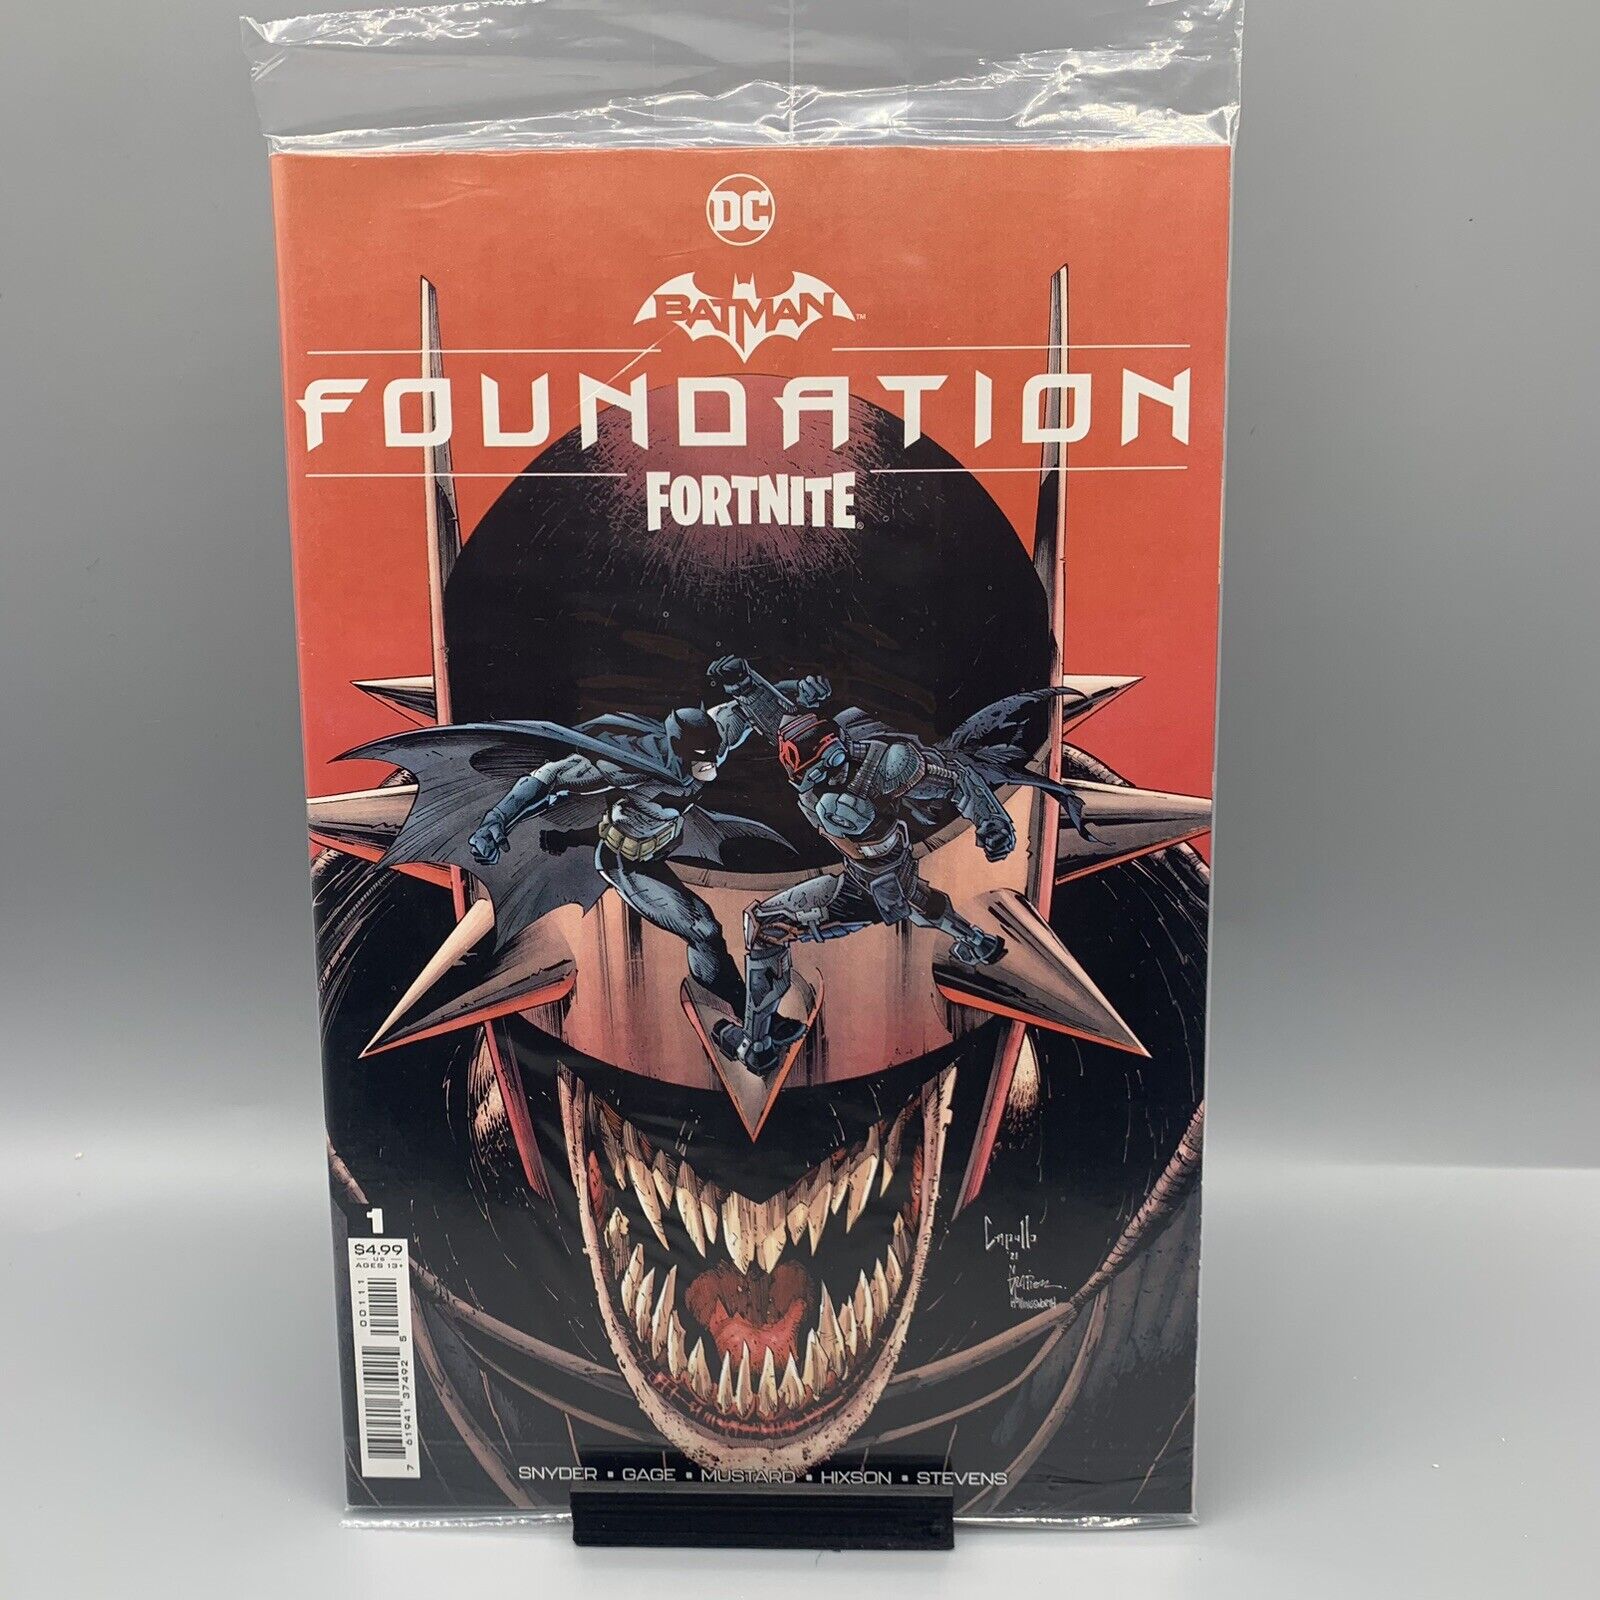 Batman / Fortnite: Foundation #1 (DC Comics Dec 2021) / Foundation #1 Variant